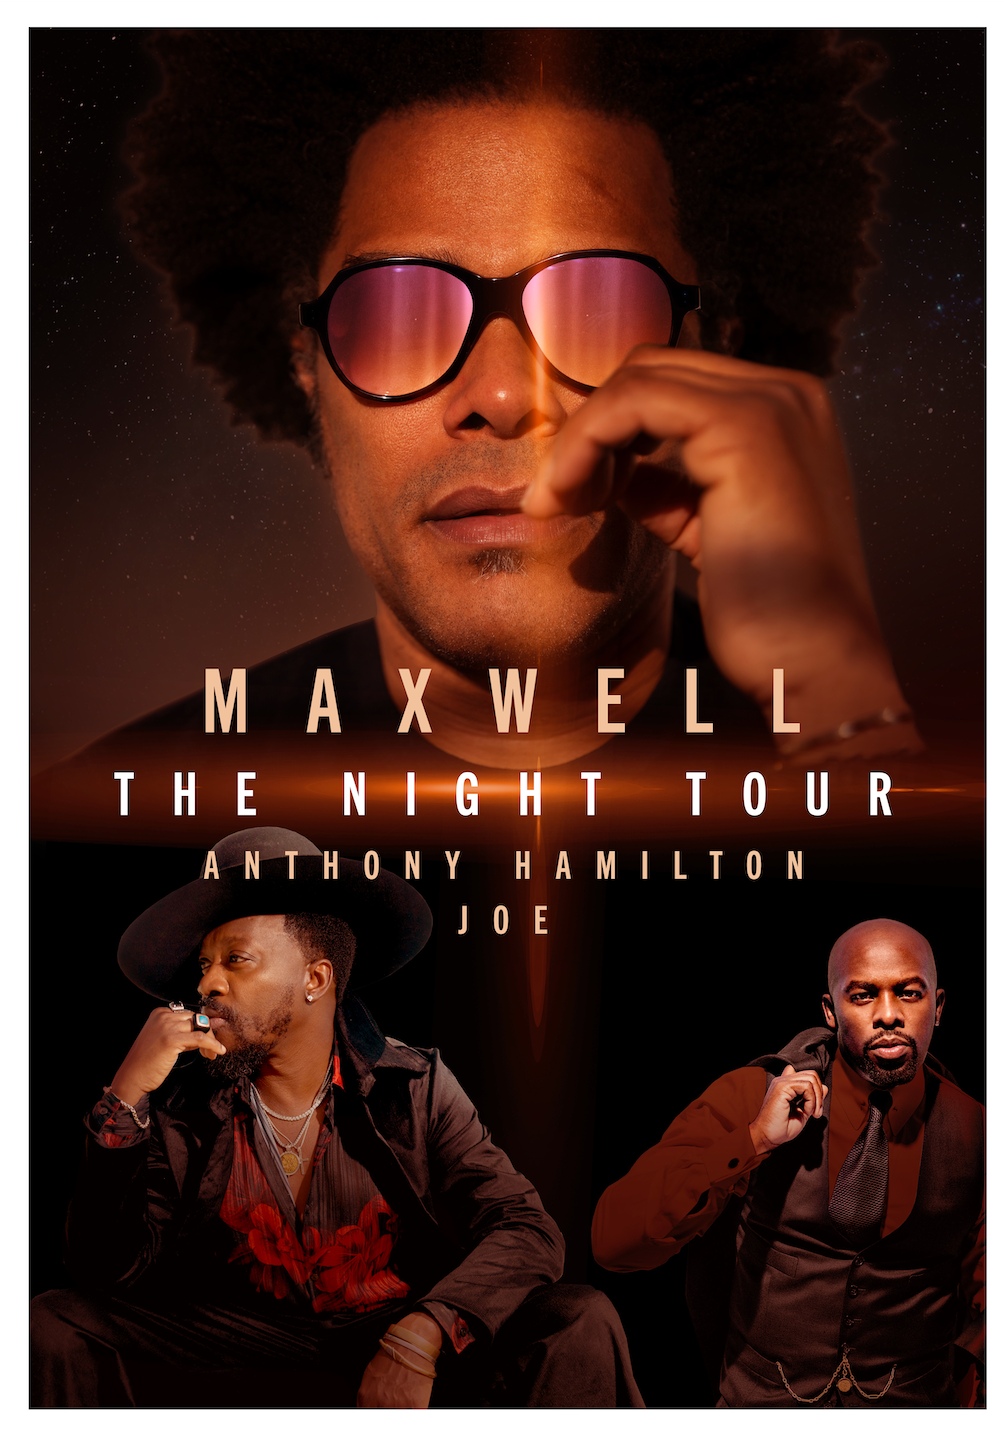 maxwell tour dates europe